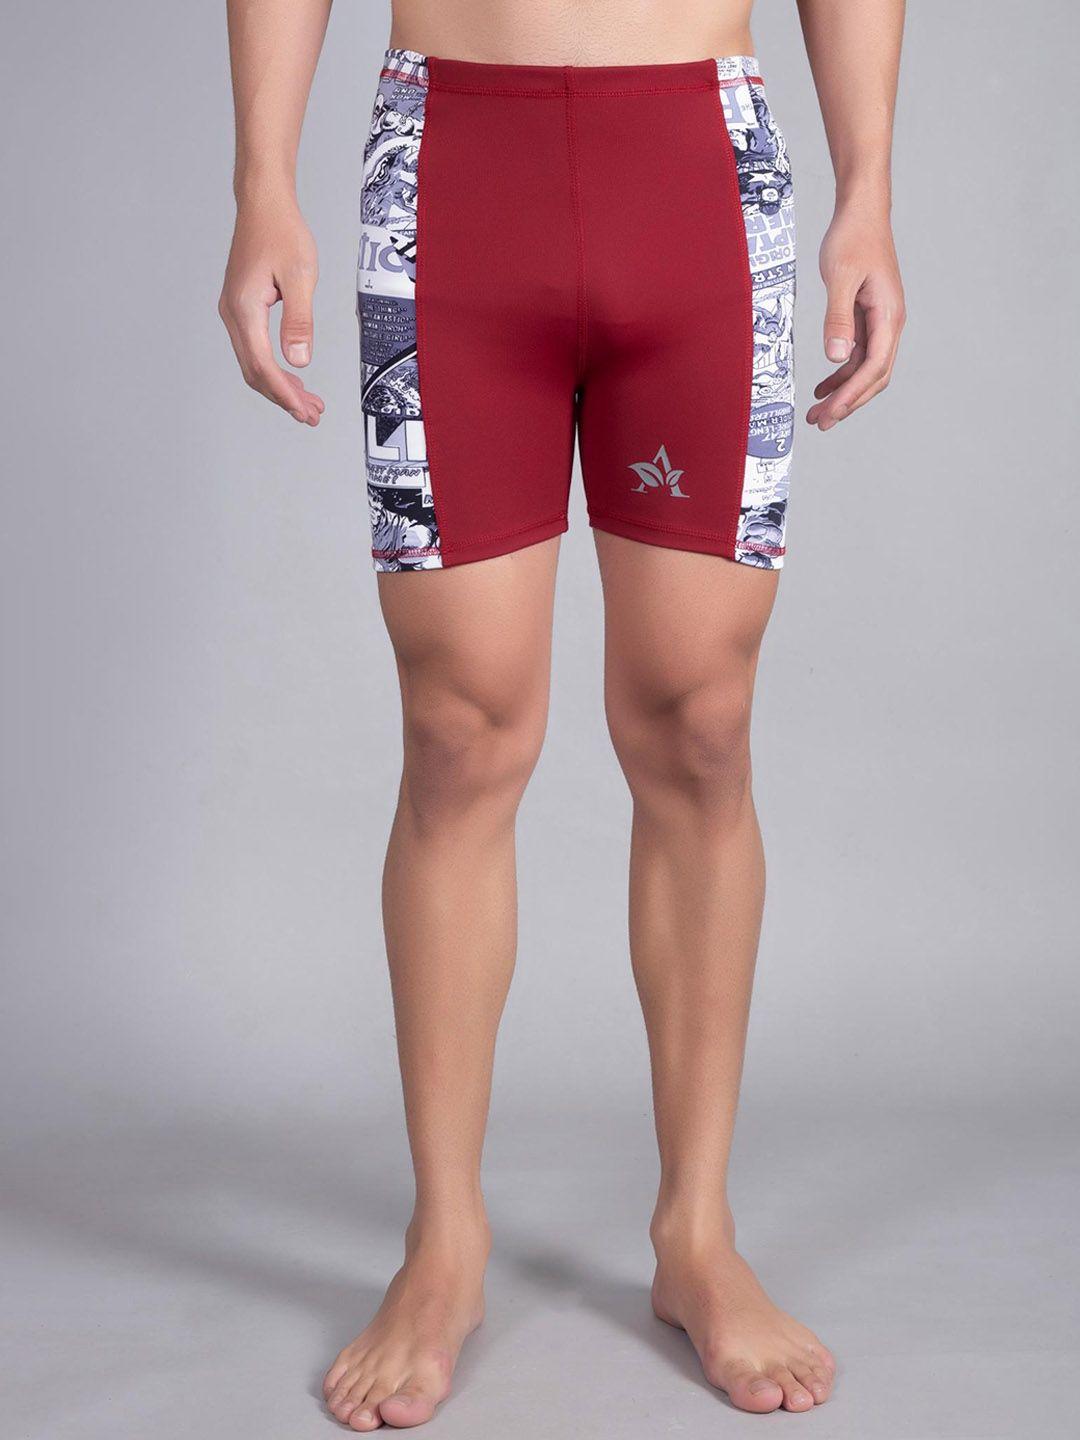 apraa & parma men skinny fit typography printed dri-fit sports shorts